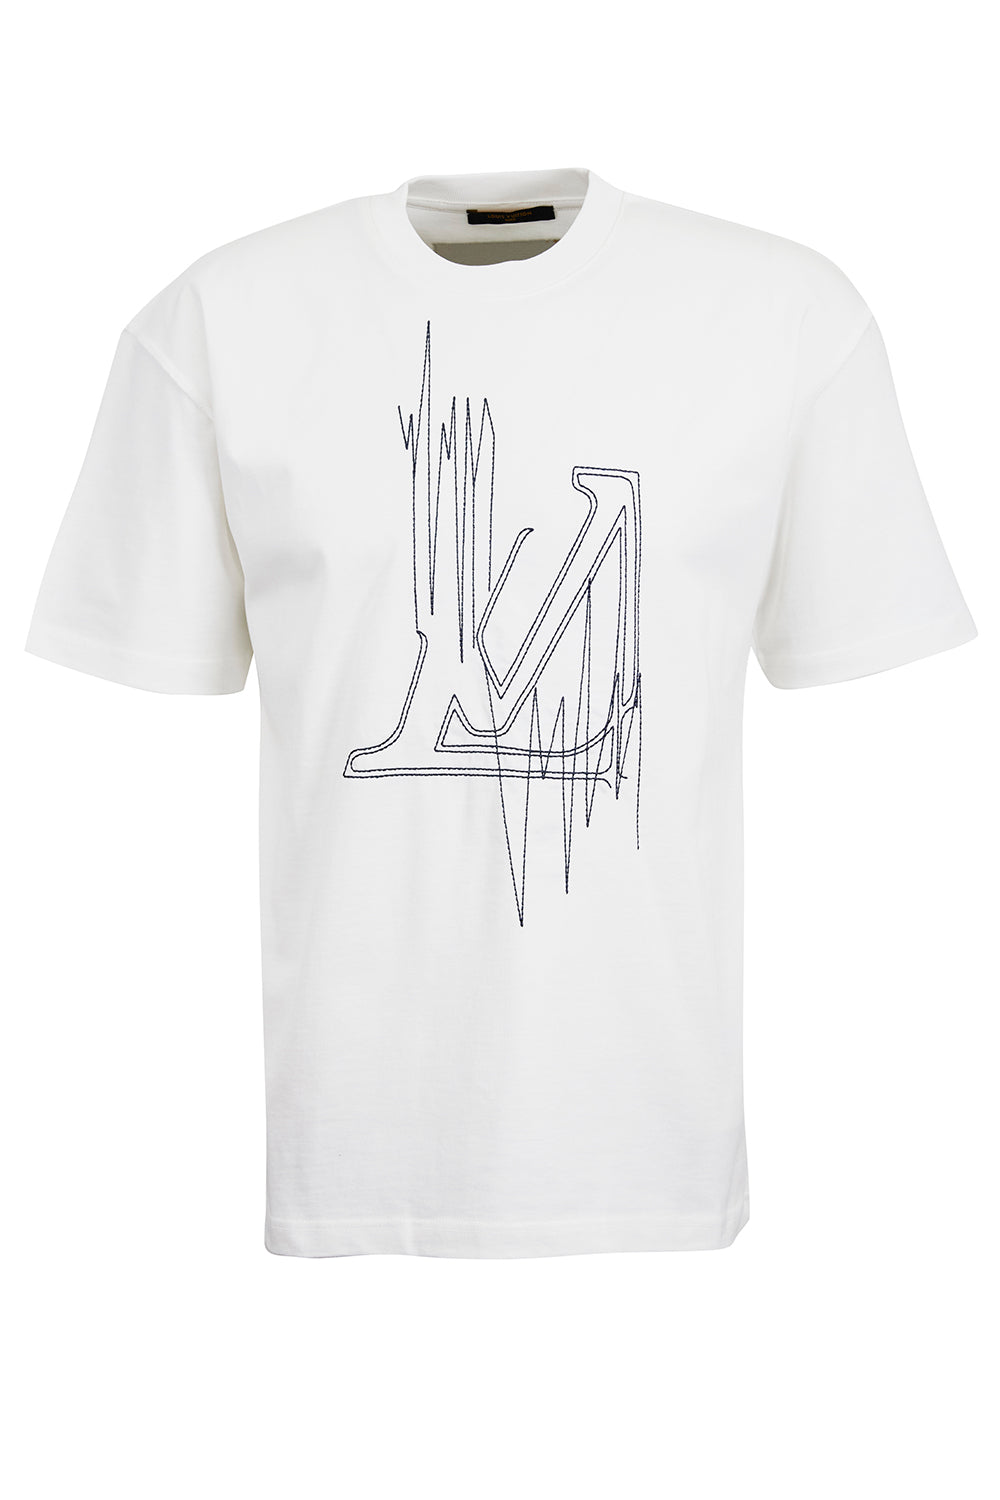 Louis Vuitton, Shirts, Like New Lv Frequency Graphic Tshirt